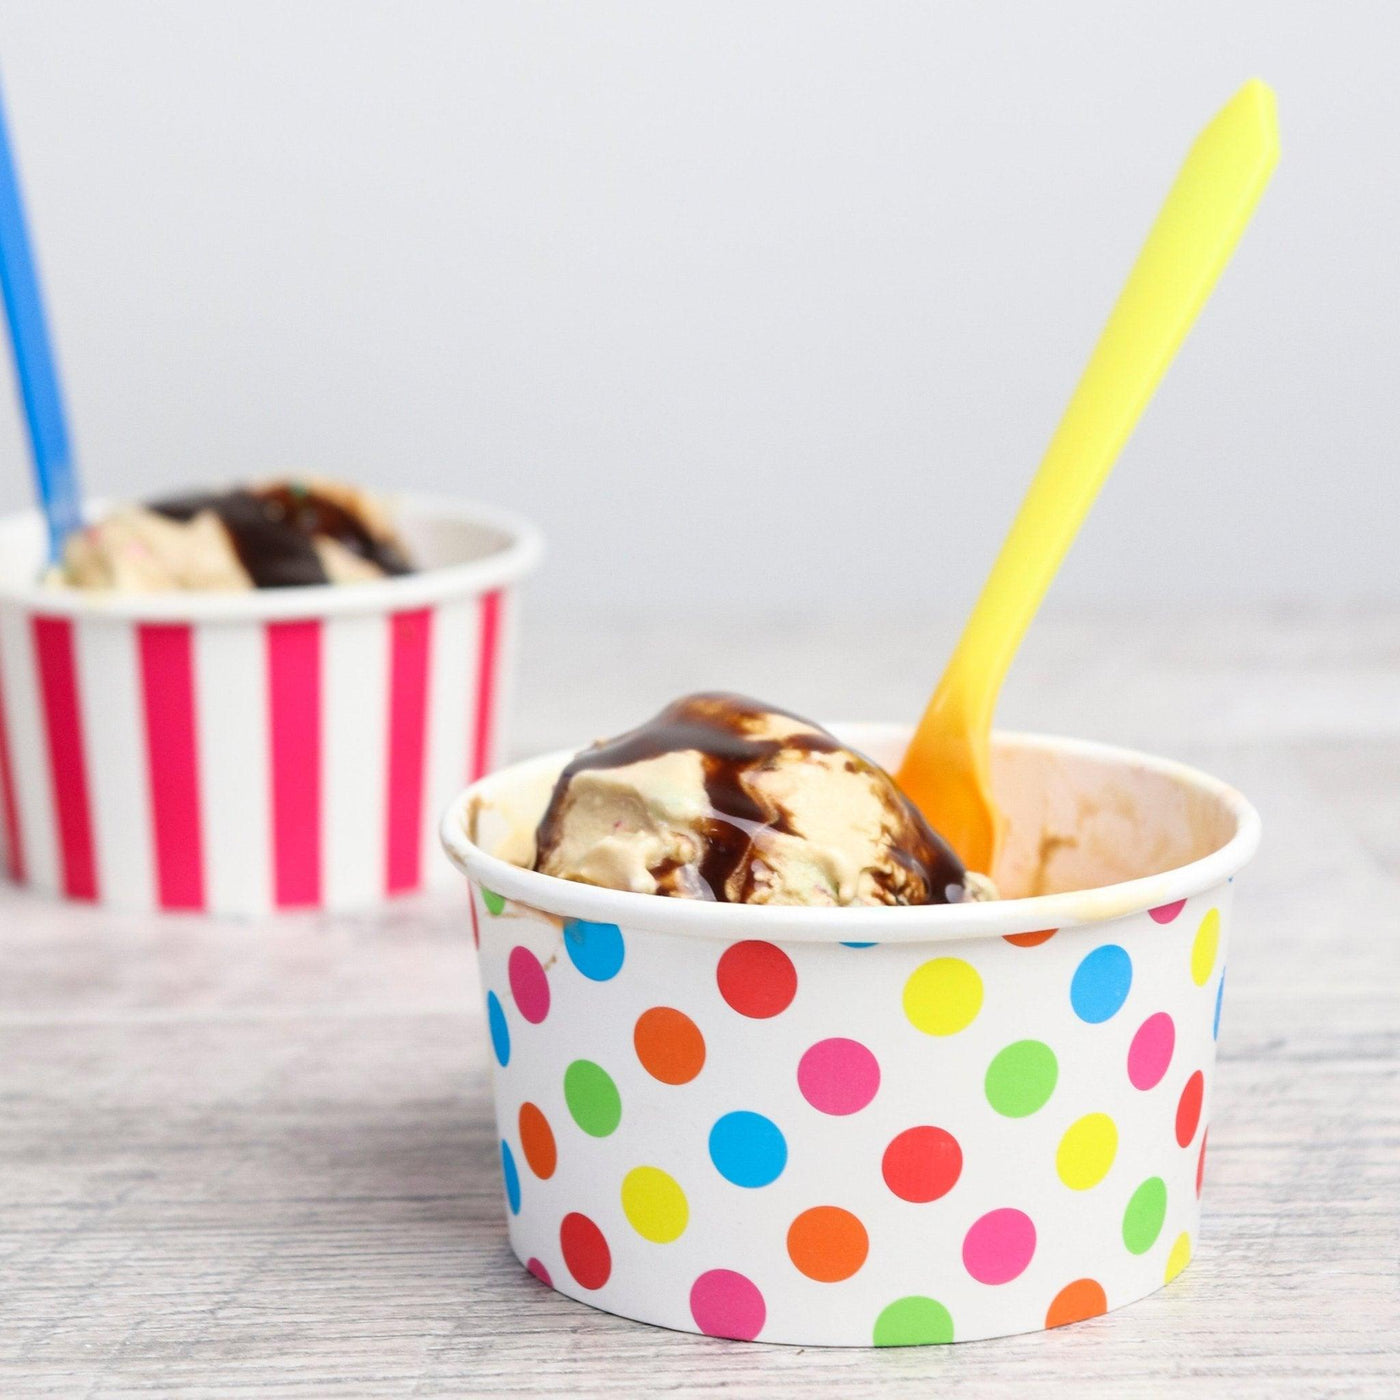 UNIQIFY® Transparent Yellow Dessert Ice Cream Spoons - Frozen Dessert Supplies